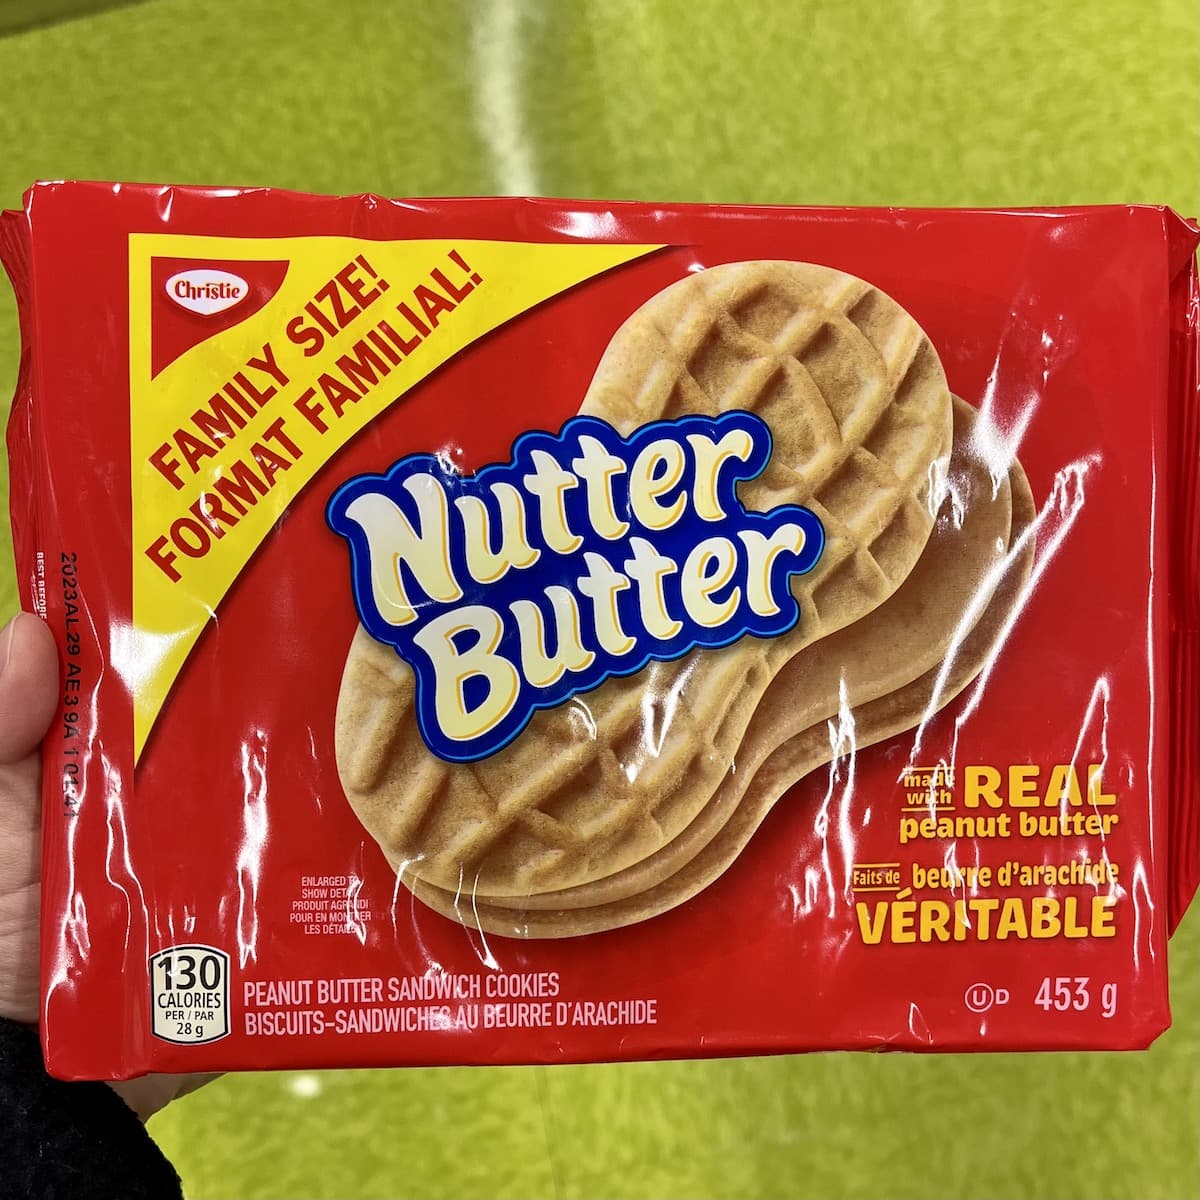 A package of Nutter Butter peanut butter sandwich cookies.